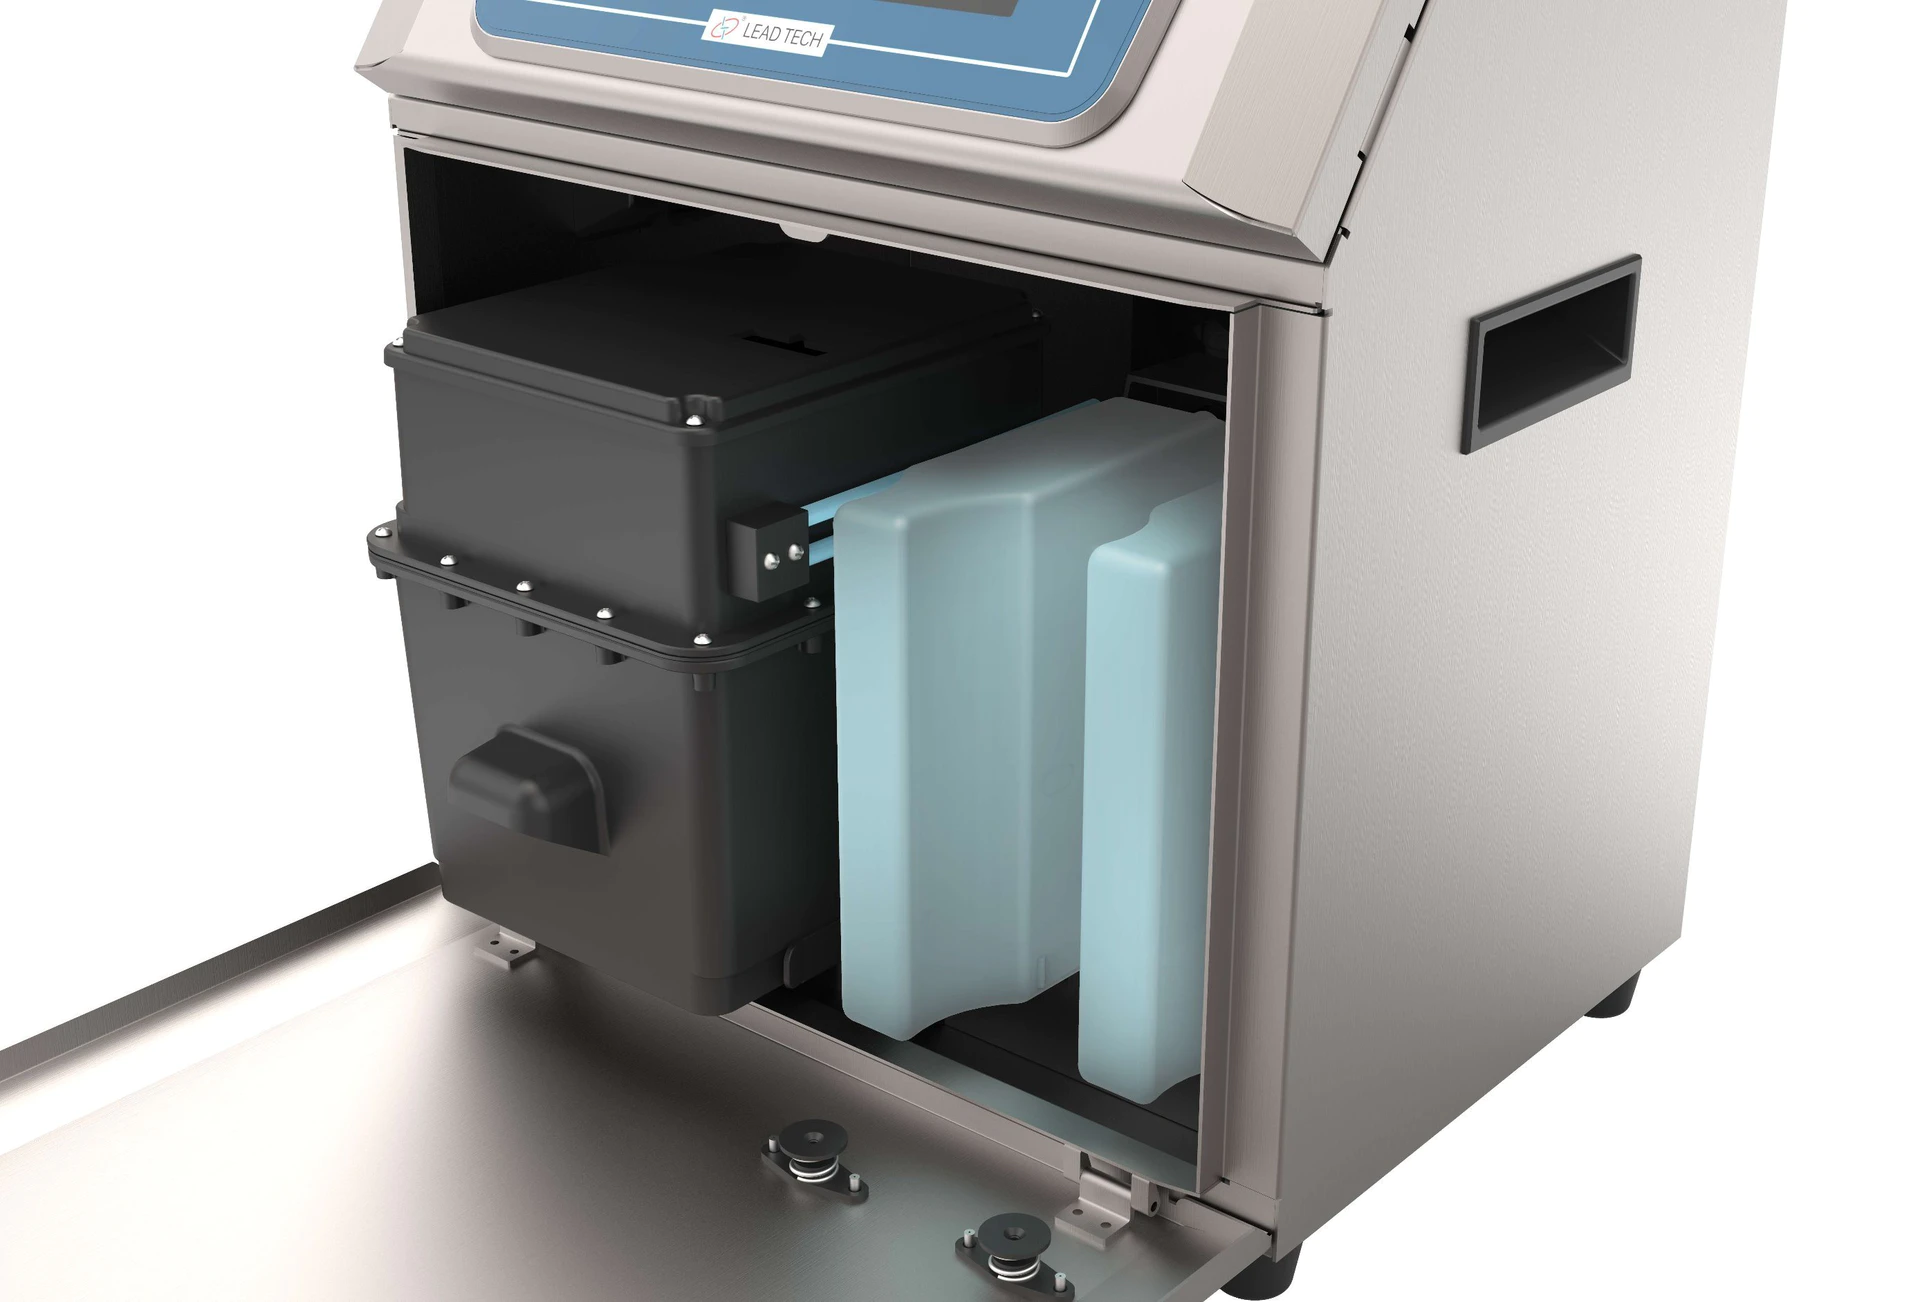 Lead Tech Digital Inkjet Printer Printing Machine for Cables, Bottles